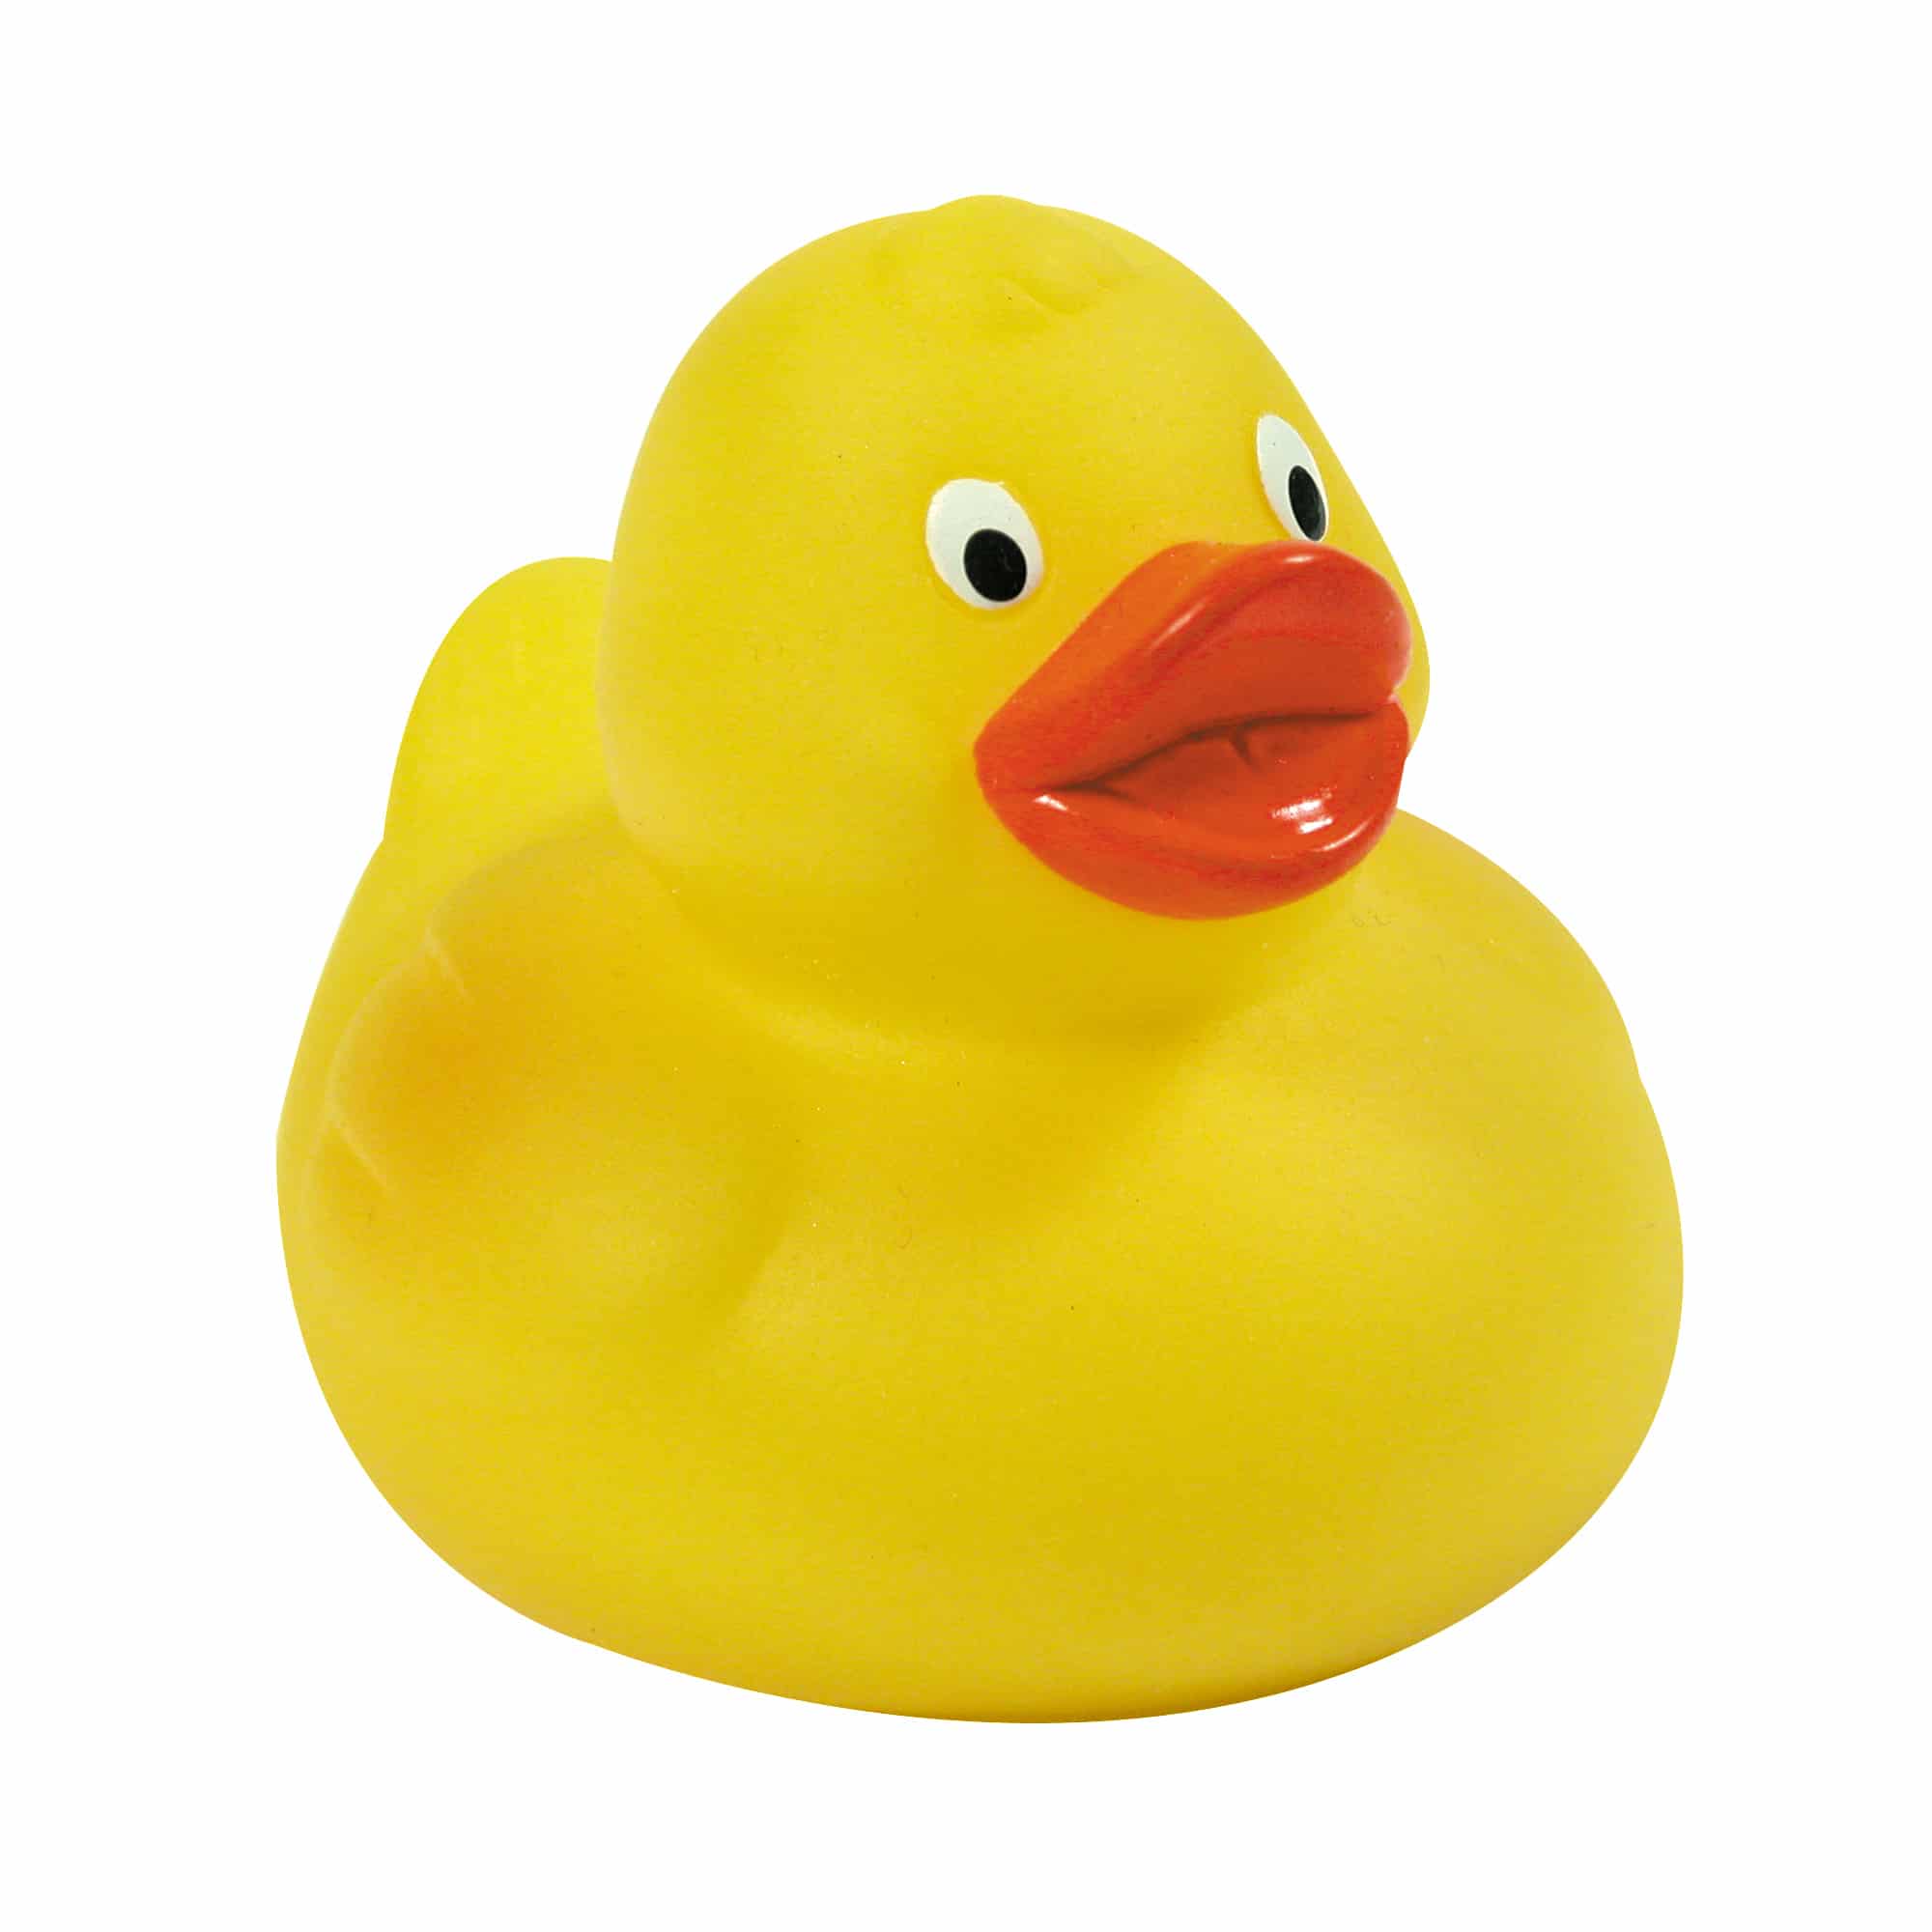 Yellow Rubber Ducky 3 Rubber Duck